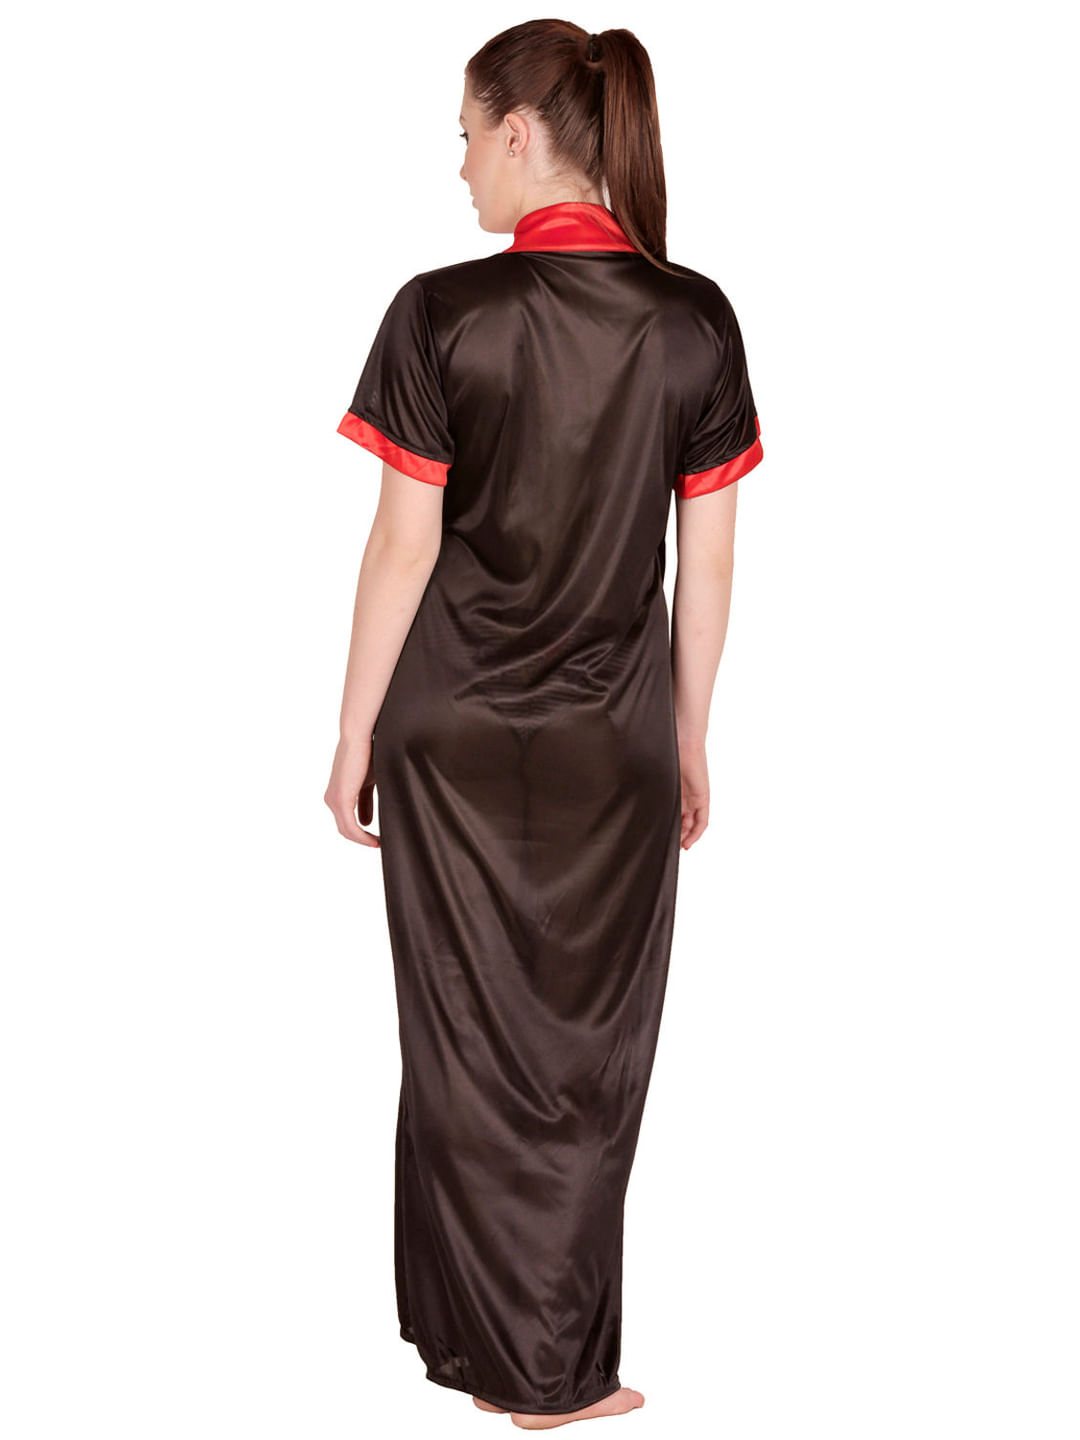 Satin Red, Black Robe, Housecoat (Free Size, HC-49)